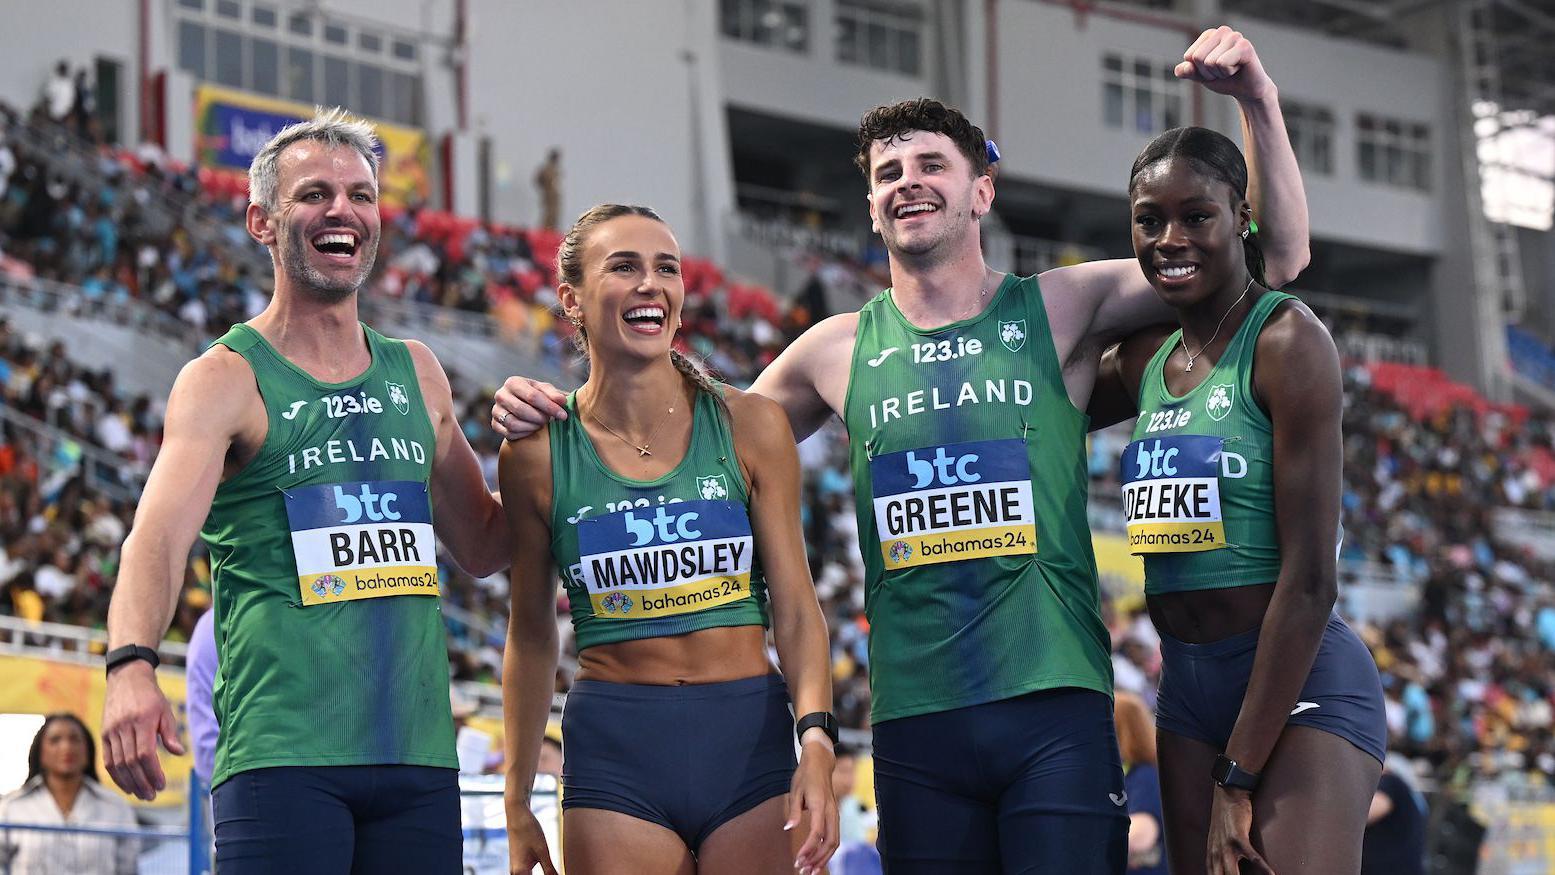 magnificent bronze for irish mixed relay squad